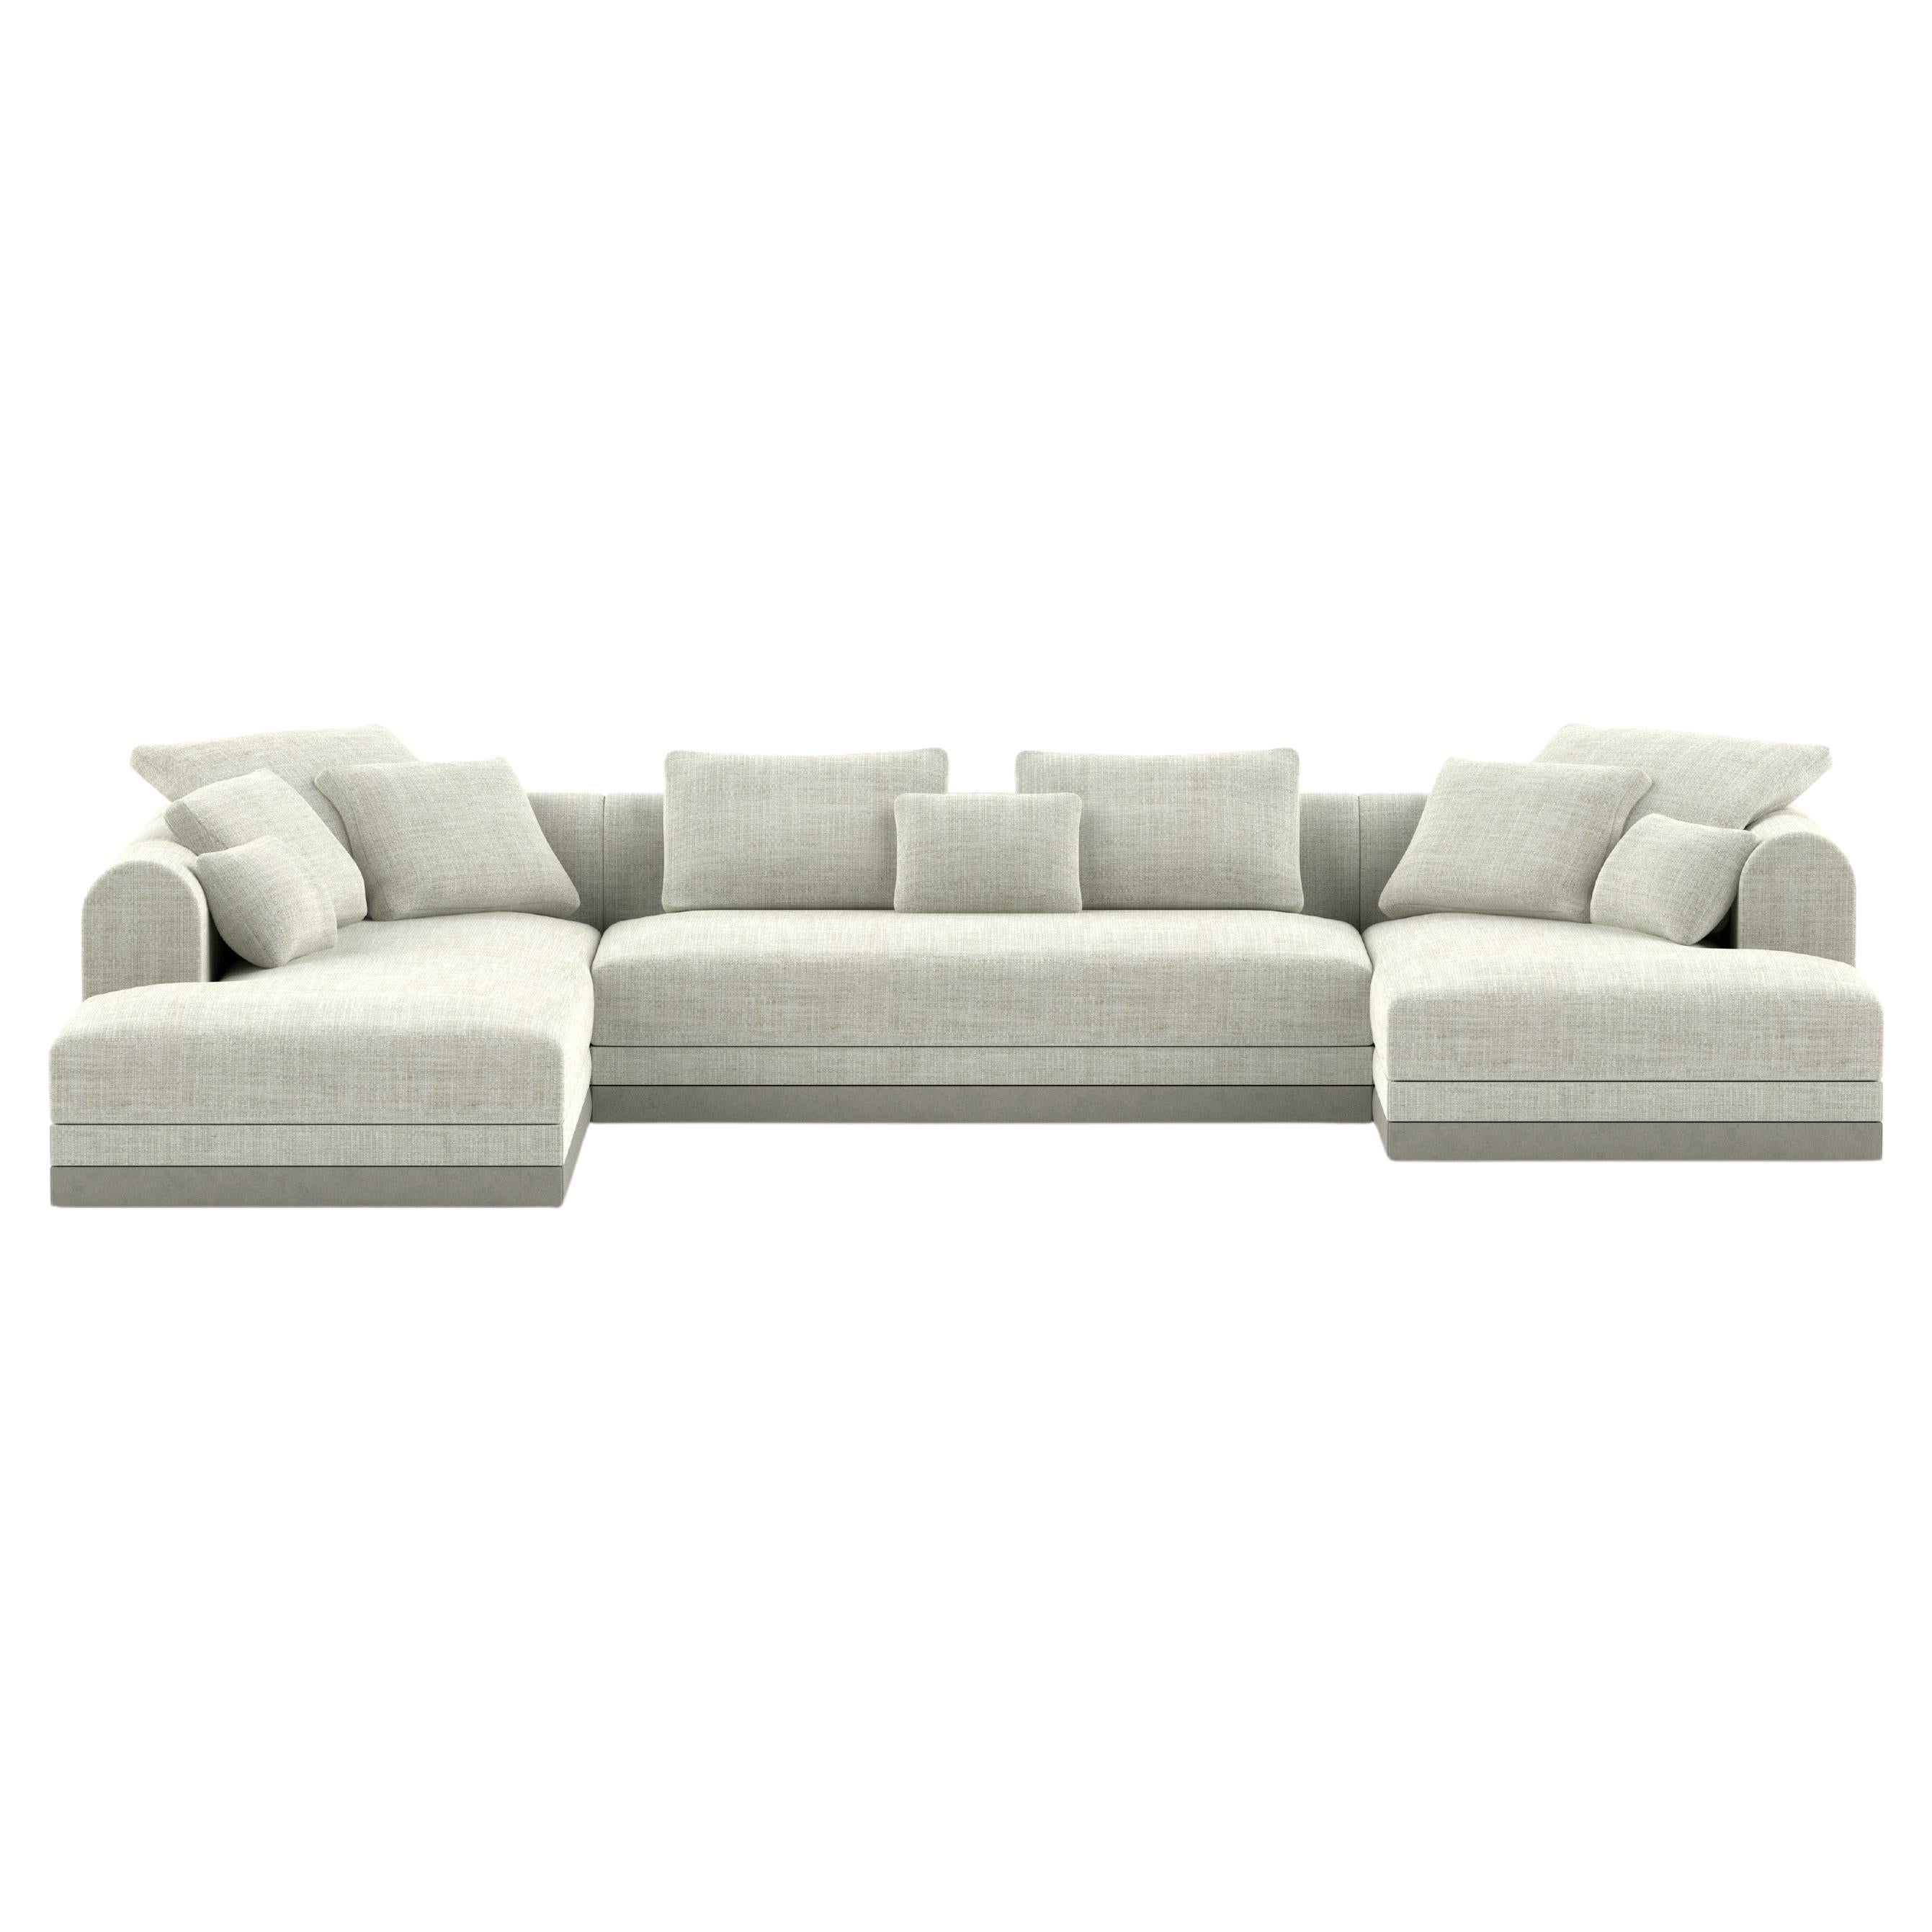 'Aqueduct' Contemporary Sofa by Poiat, Setup 4, Fox 02, Low Plinth For Sale